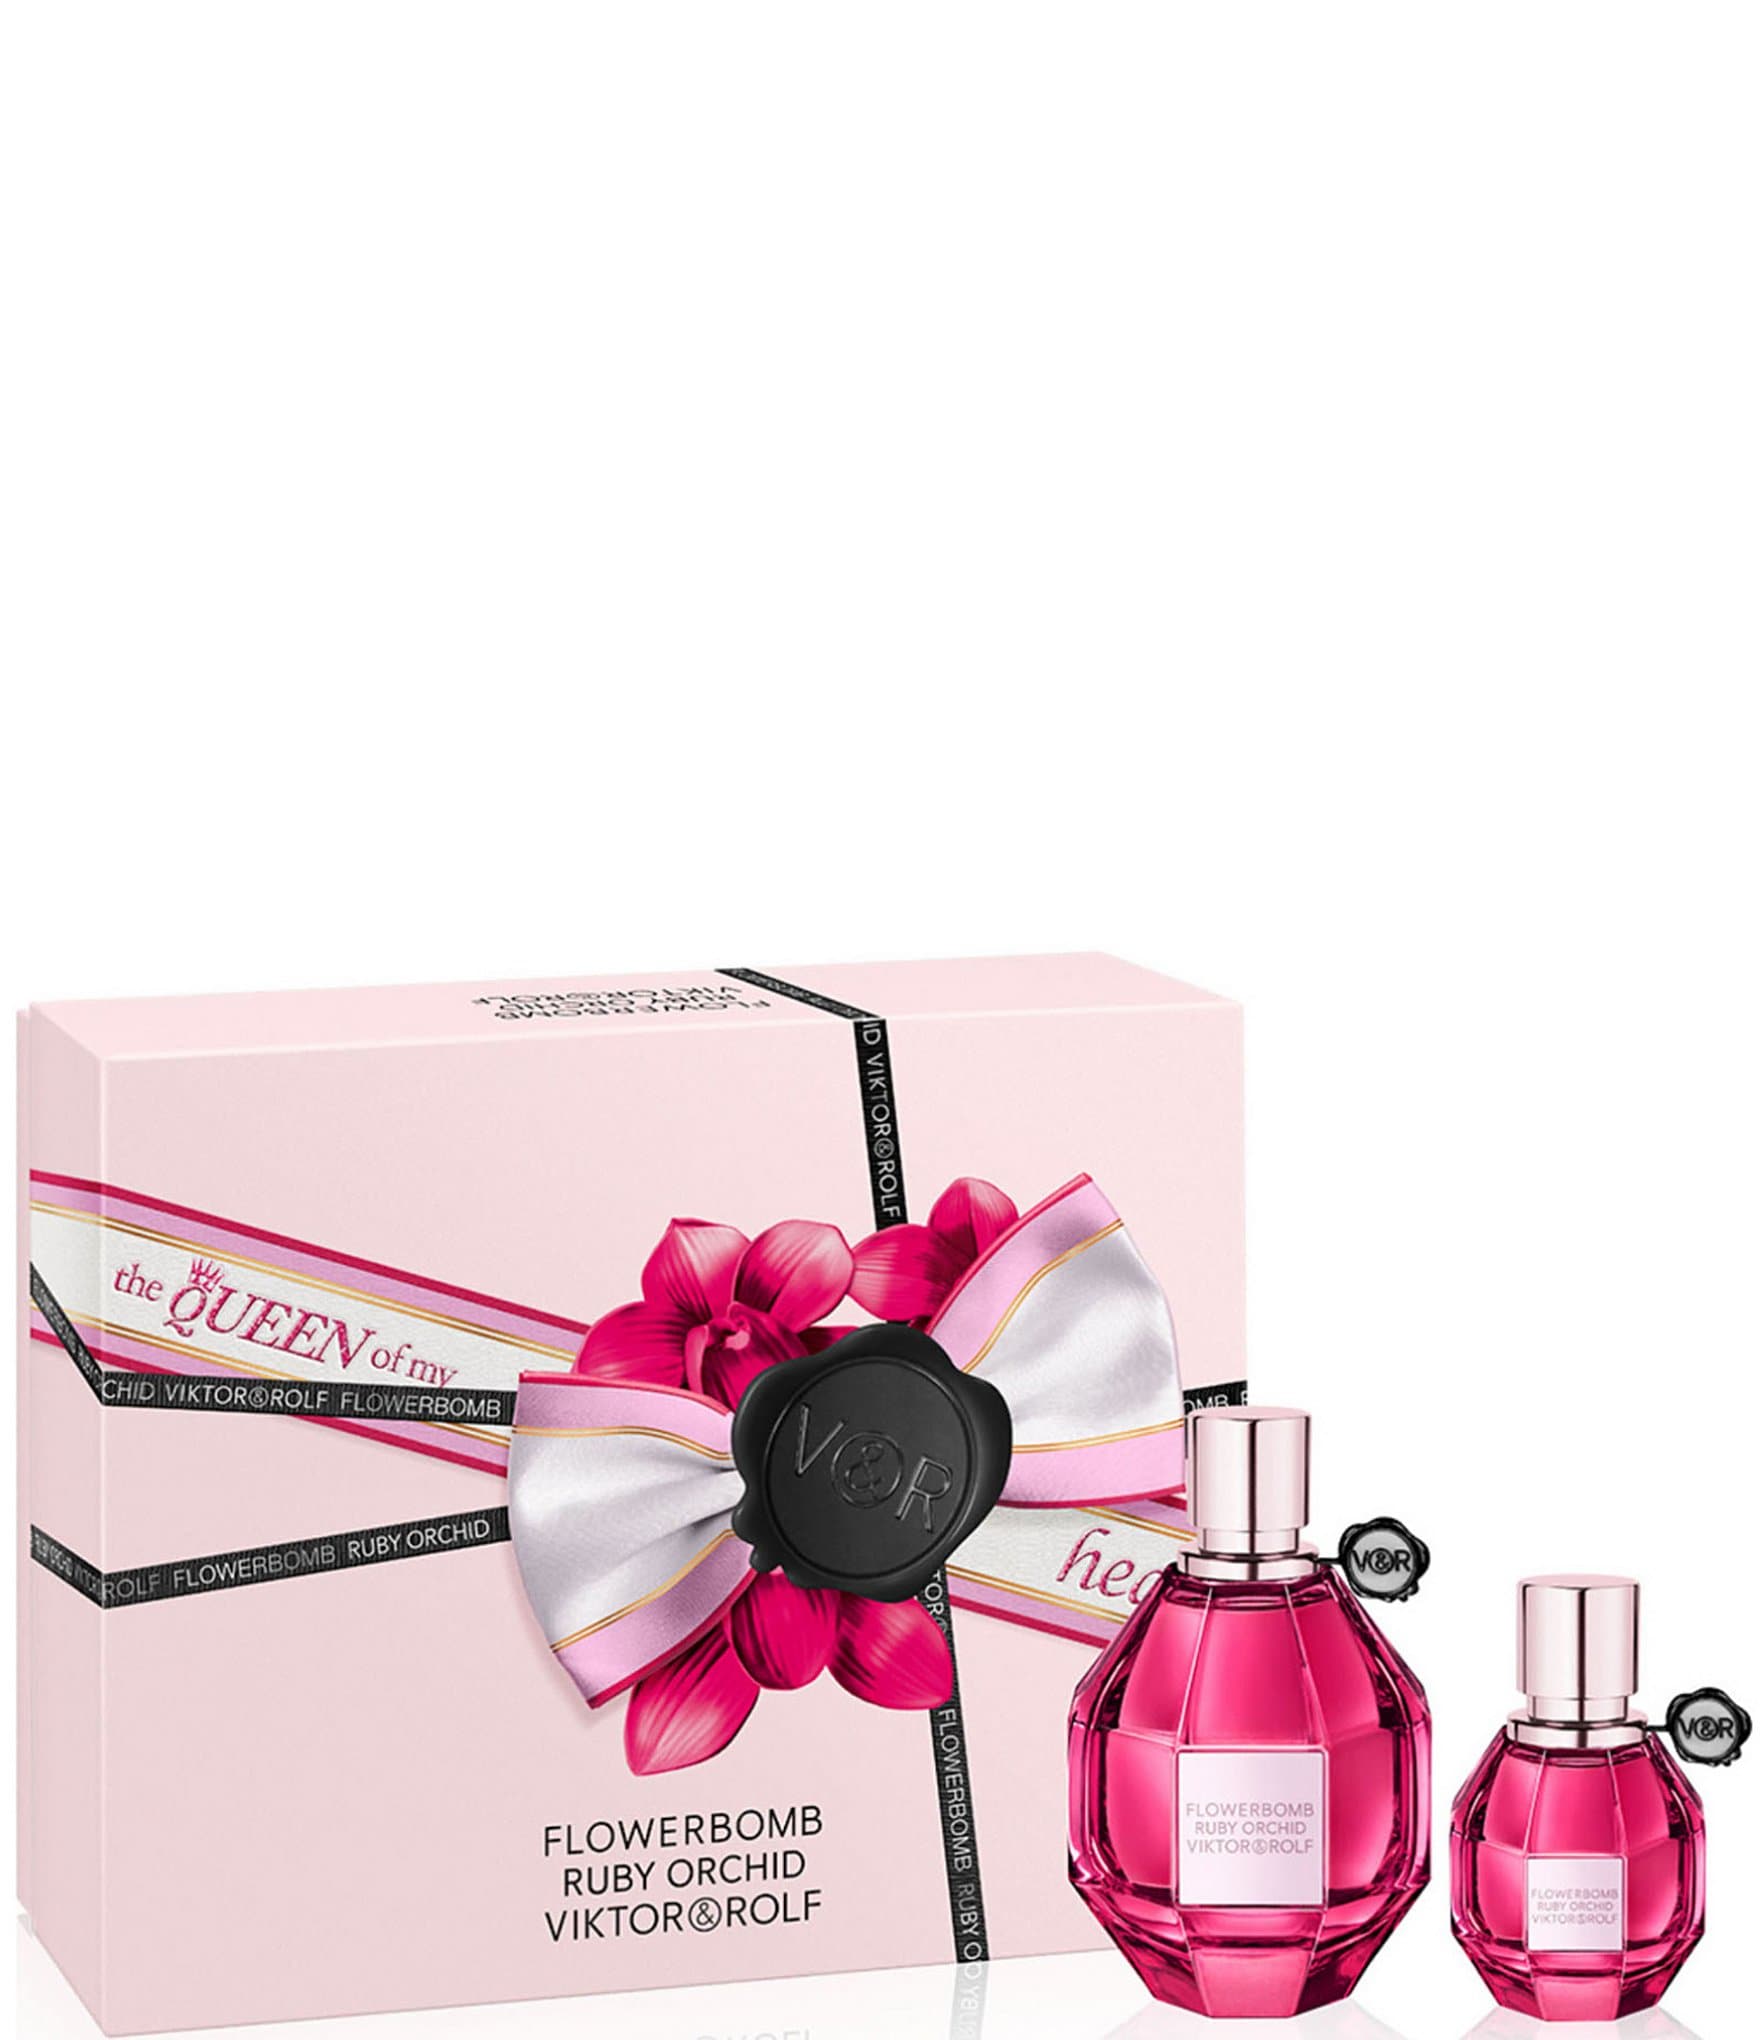 identifikation Hospital Mountaineer Viktor & Rolf Flowerbomb Ruby Orchid Eau de Parfum 2-Piece Gift Set |  Dillard's